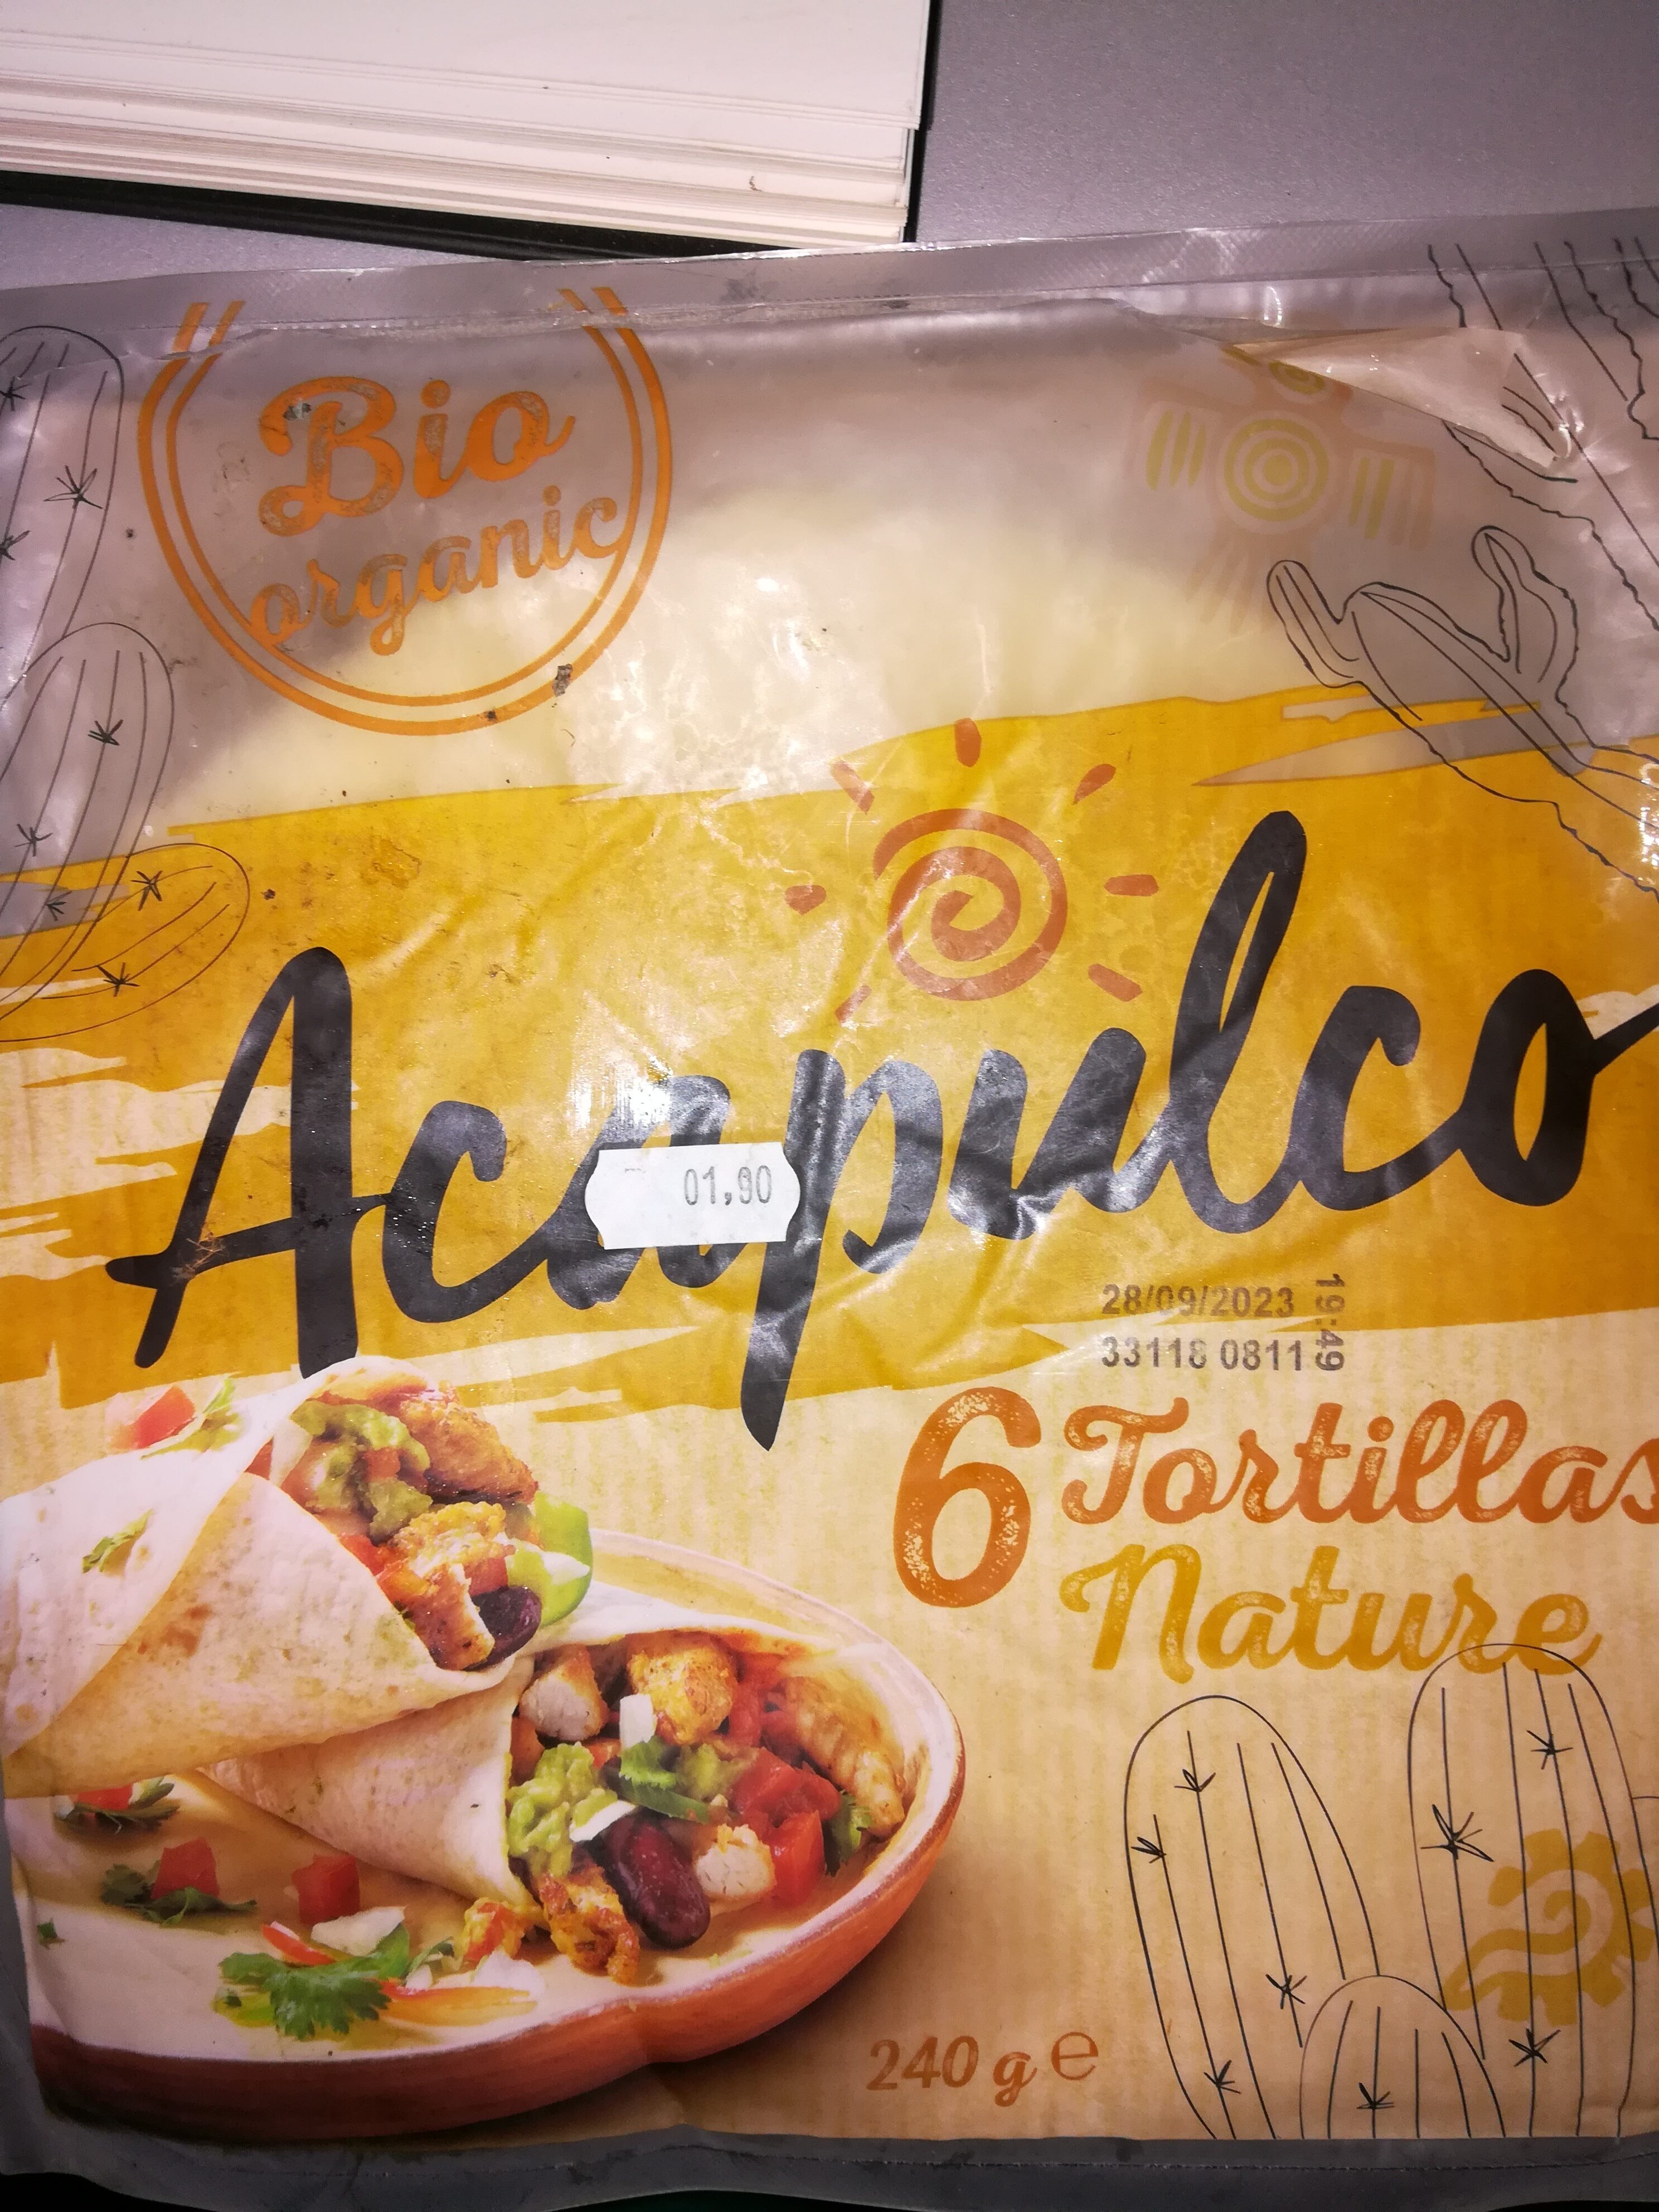 6 tortillas nature bio - Produkt - en